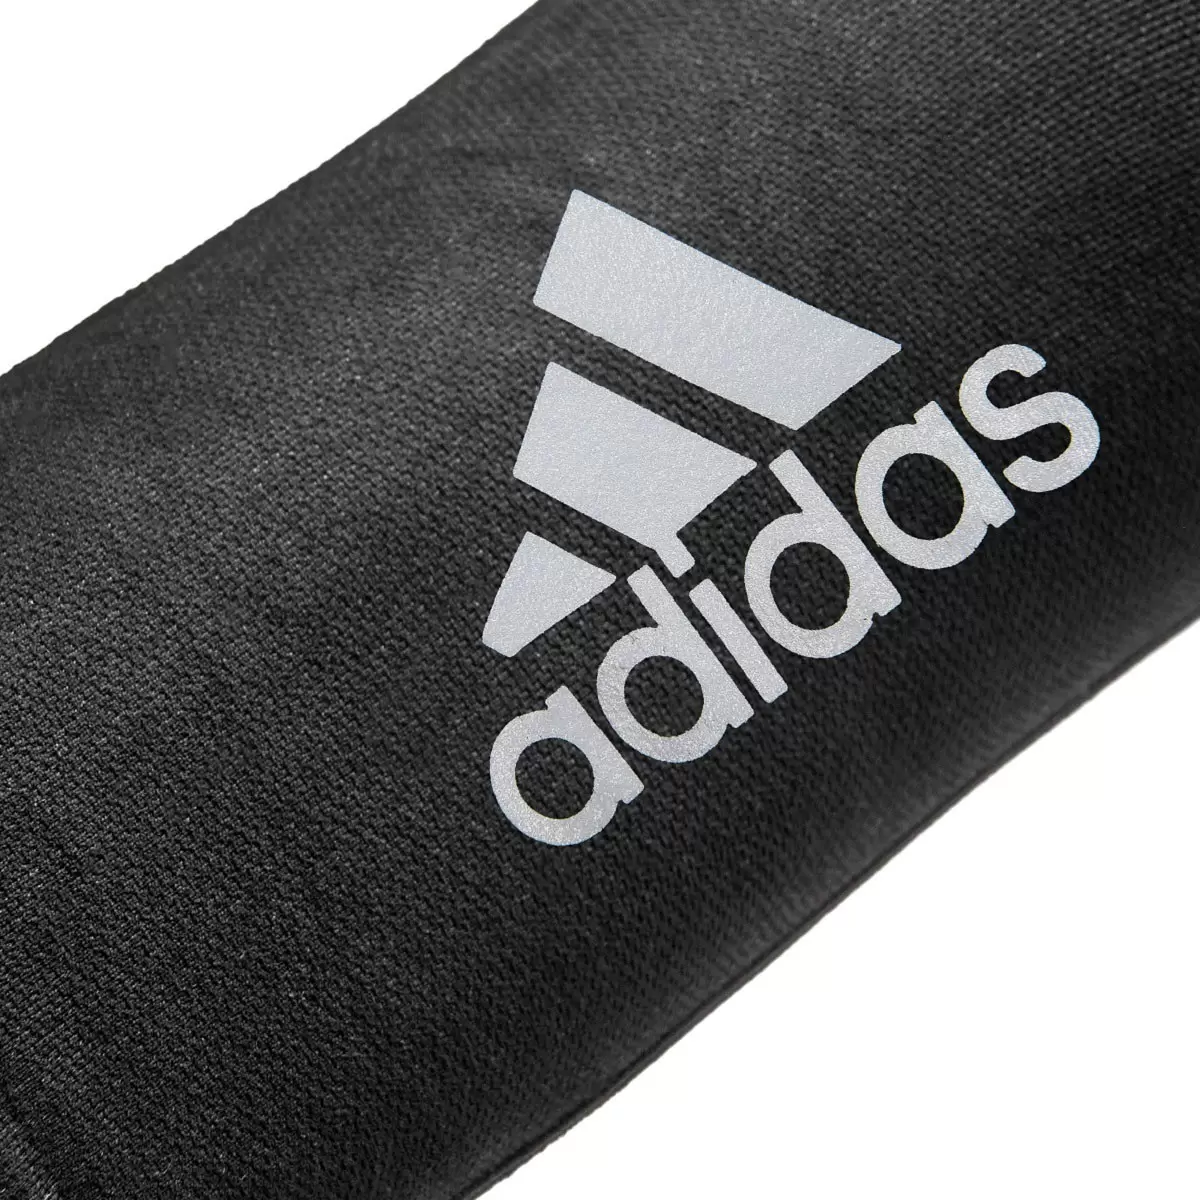 Adidas 機能壓縮袖套 L/XL